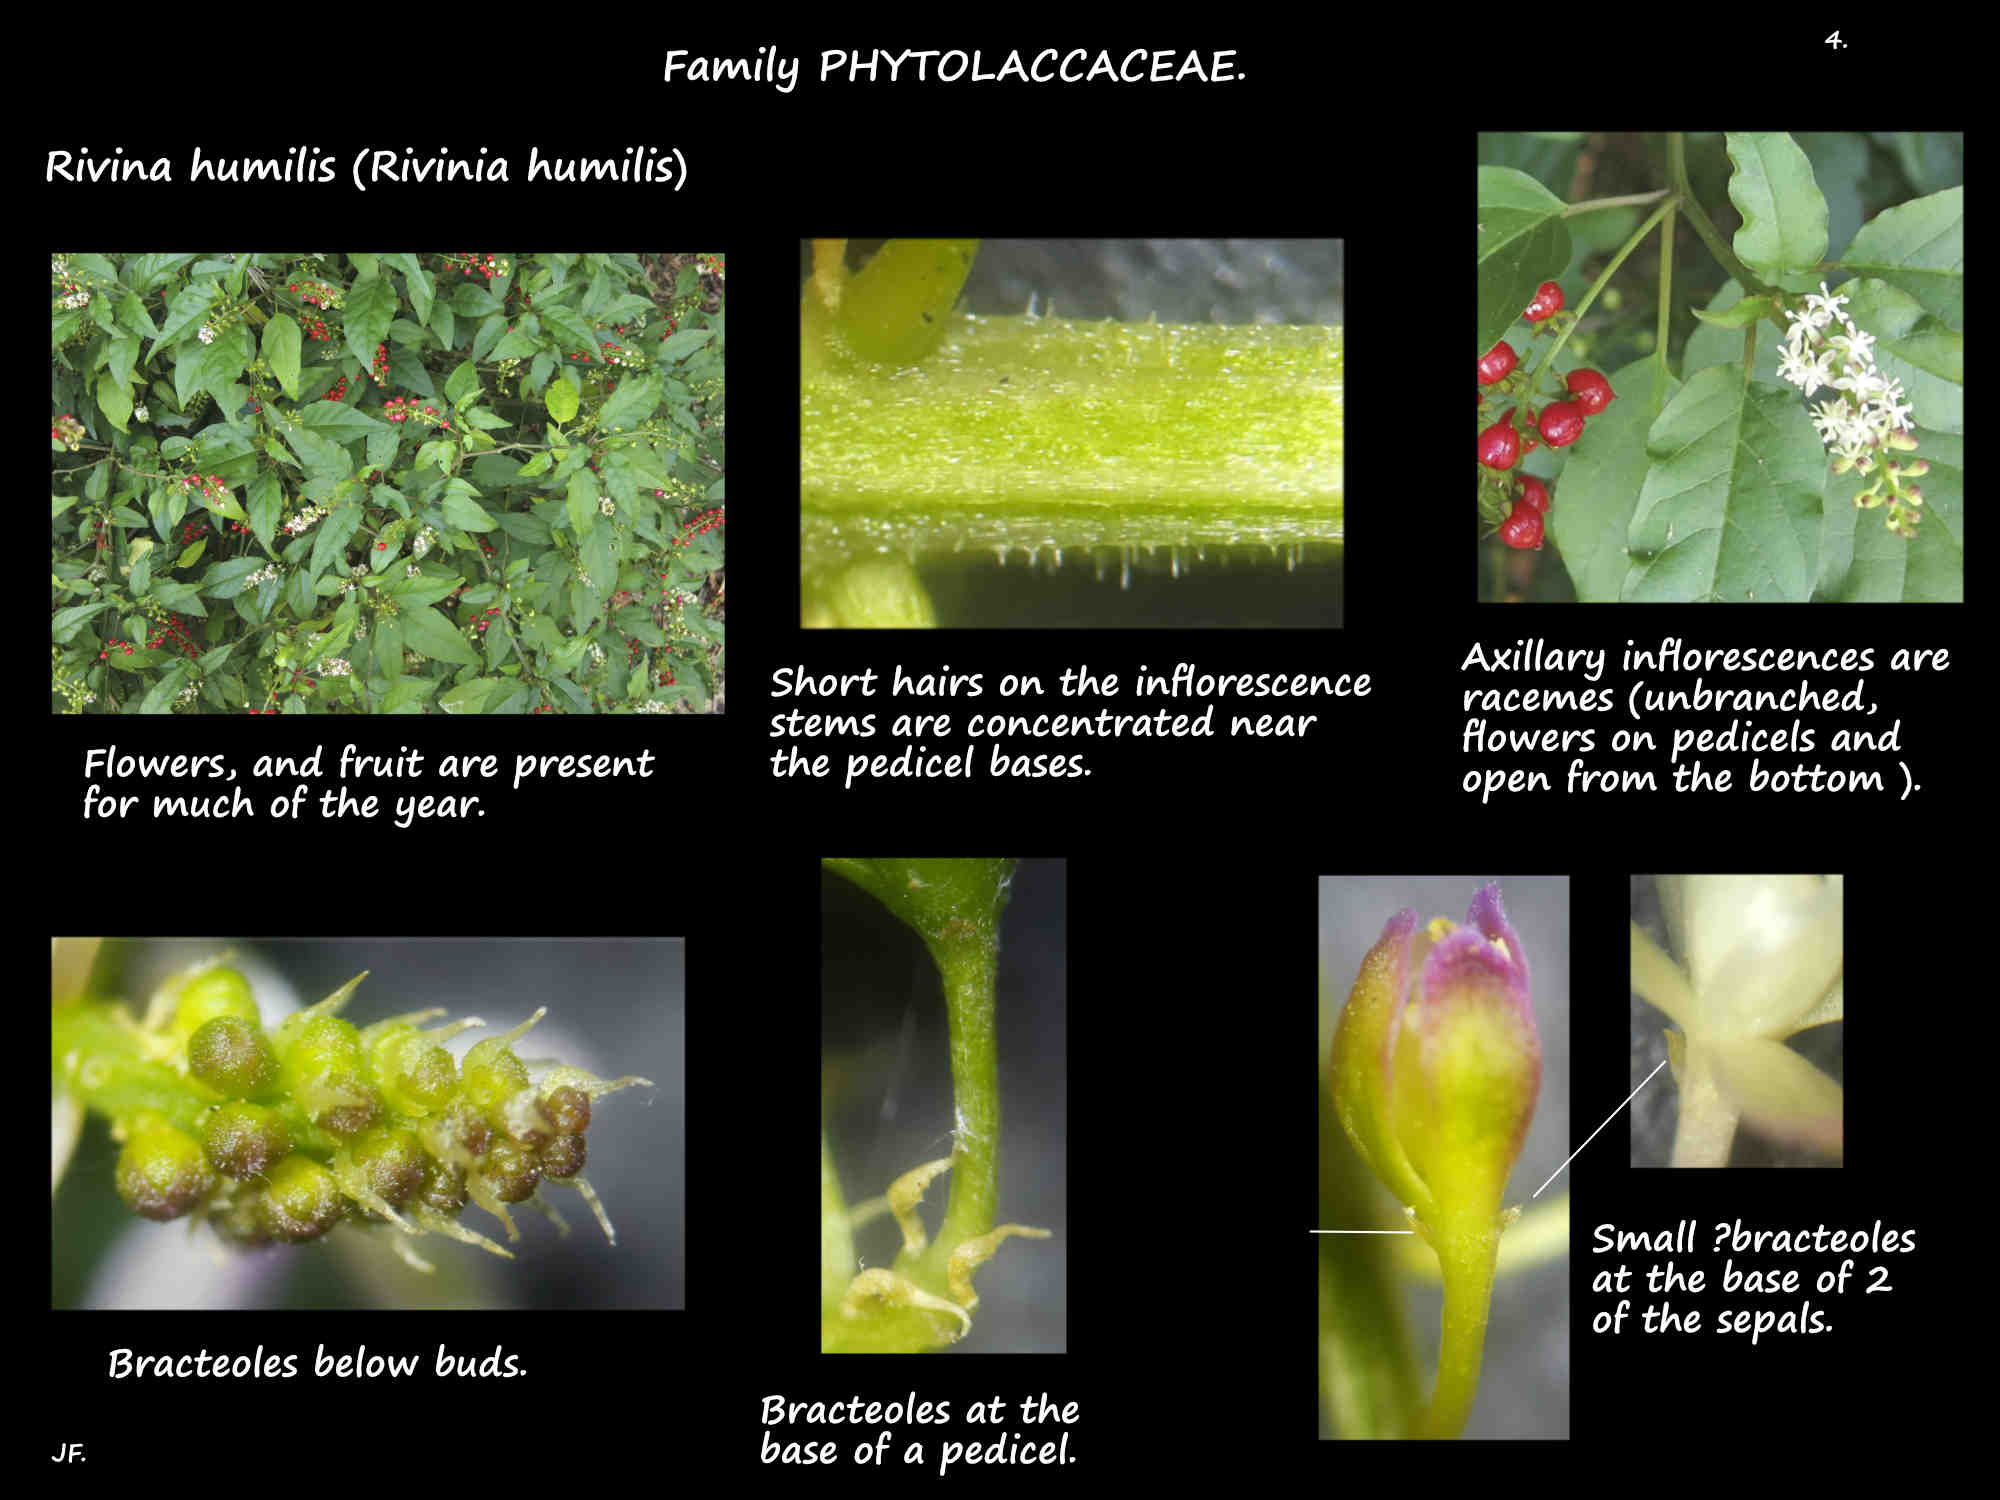 4 Rivina humilis inflorescences & bracteoles